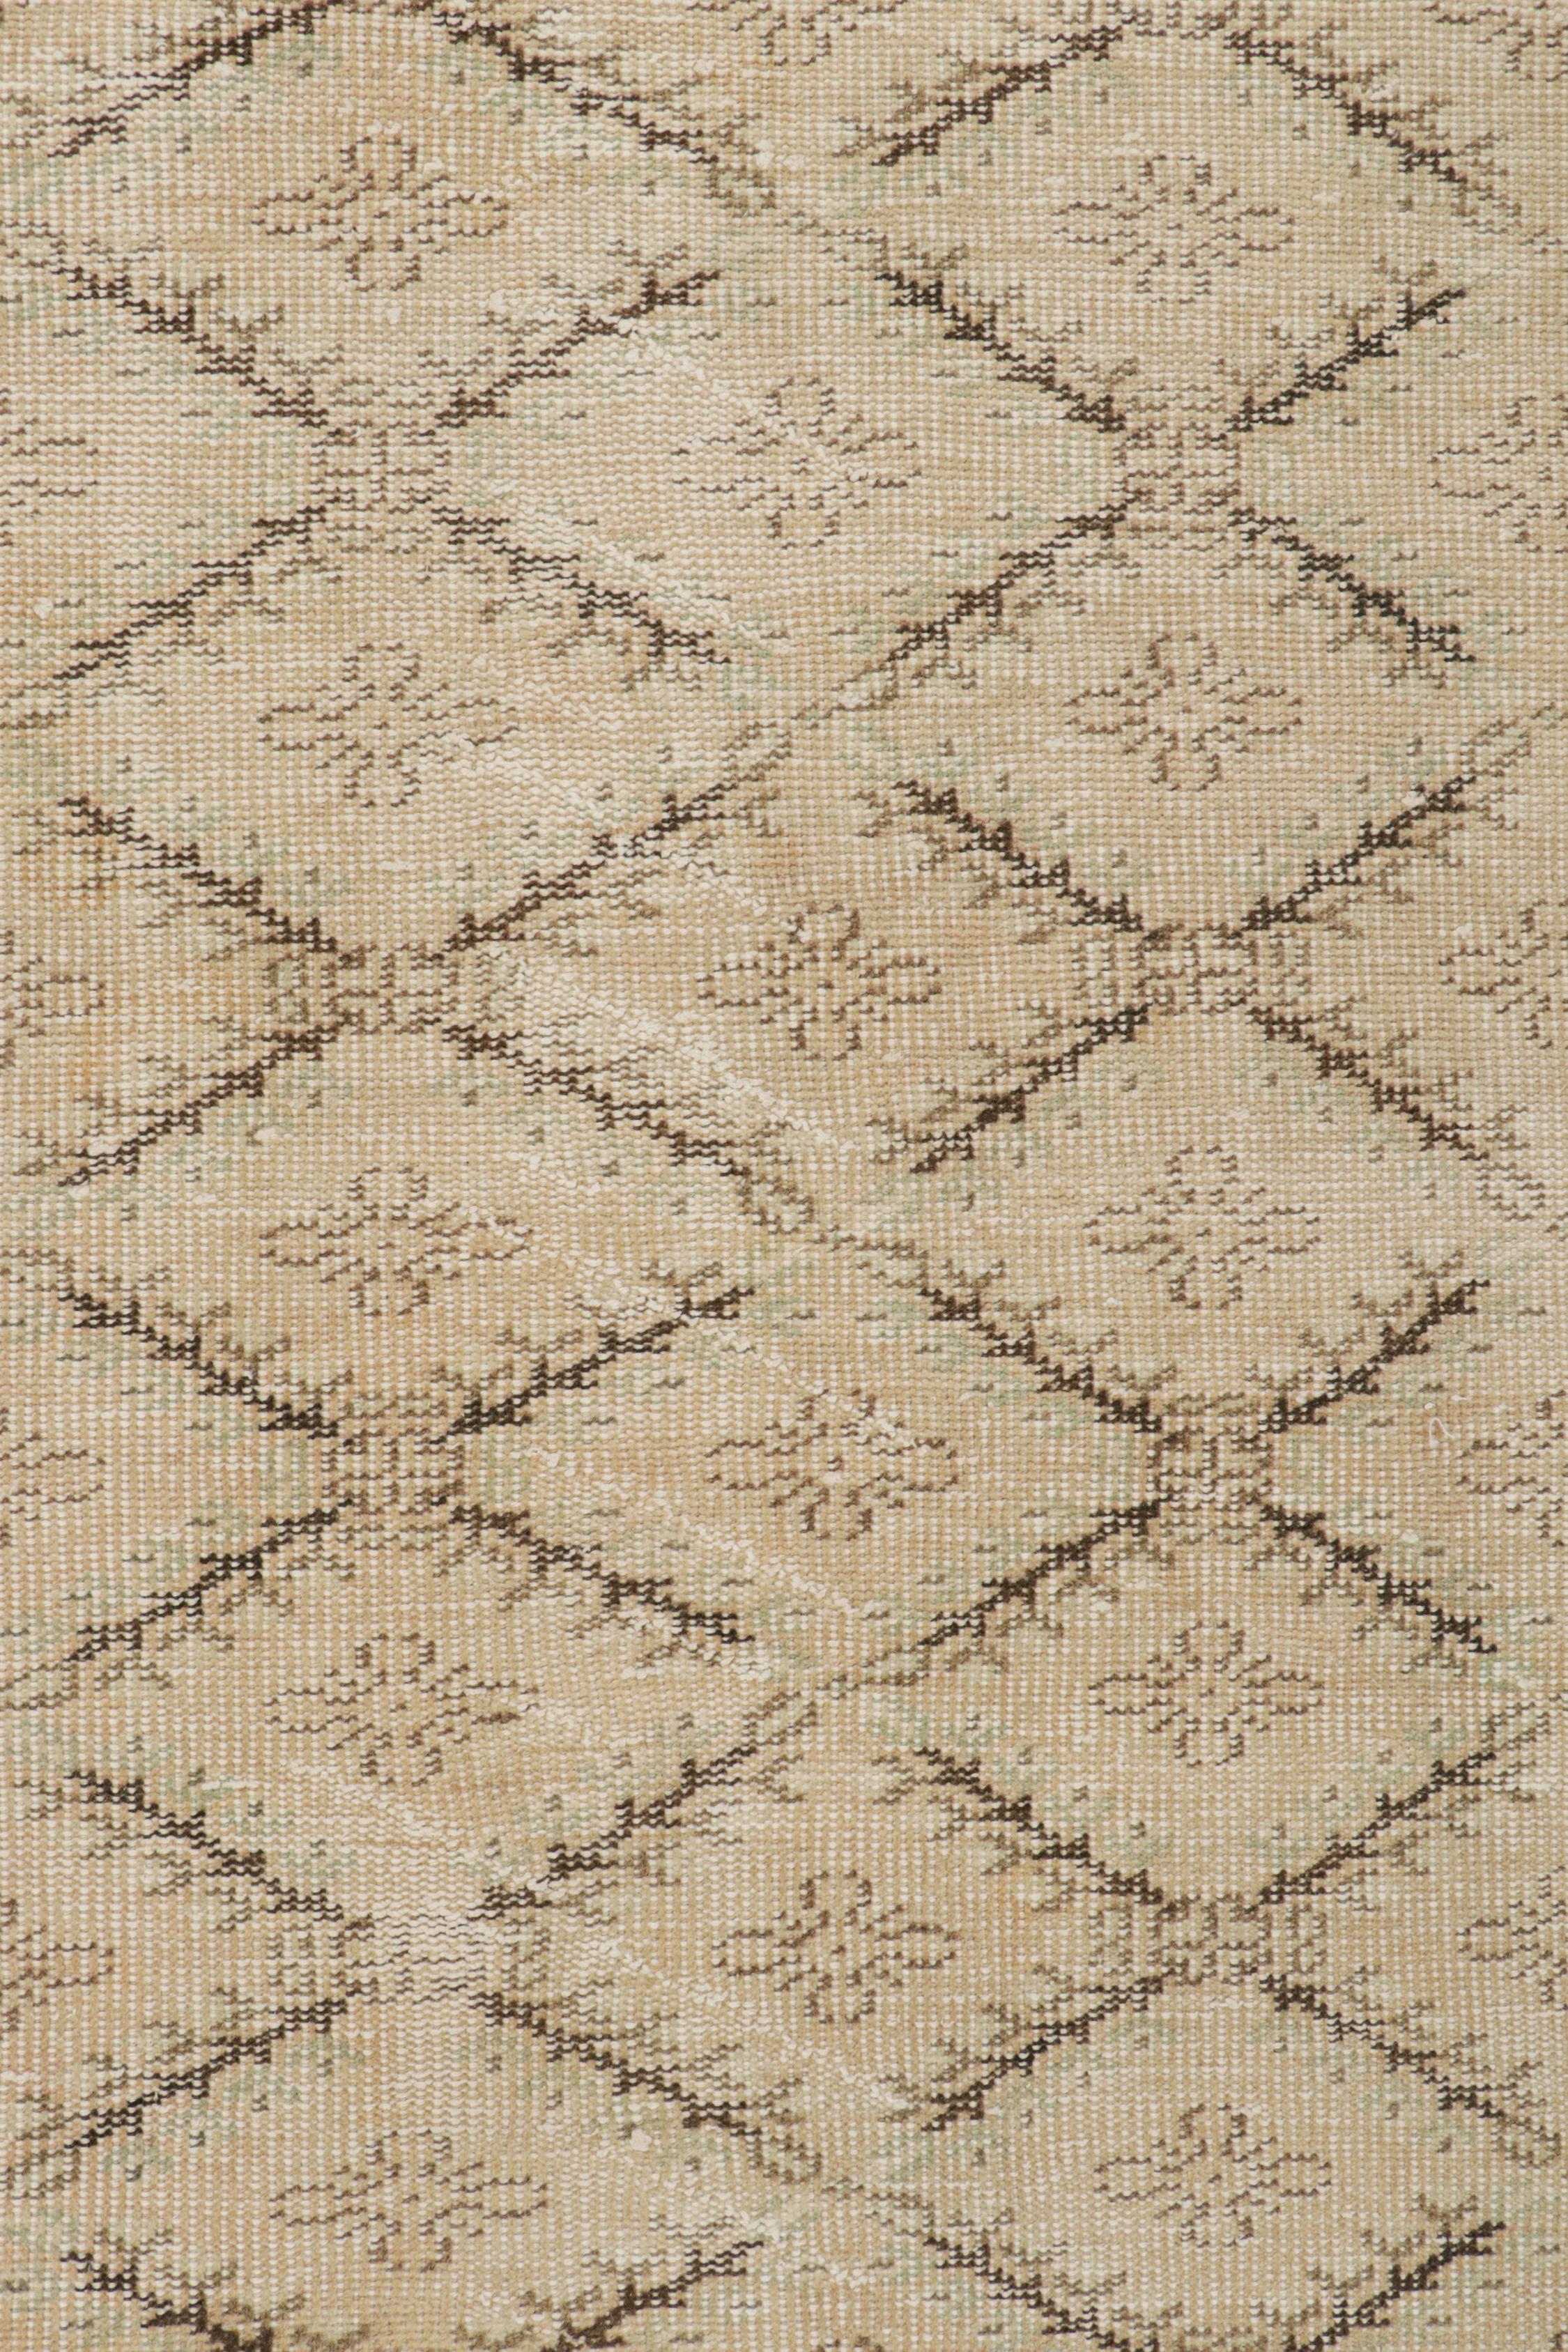 Vintage Zeki Müren Rug in Beige-Brown Geometric Patterns, by Rug & Kilim In Good Condition For Sale In Long Island City, NY